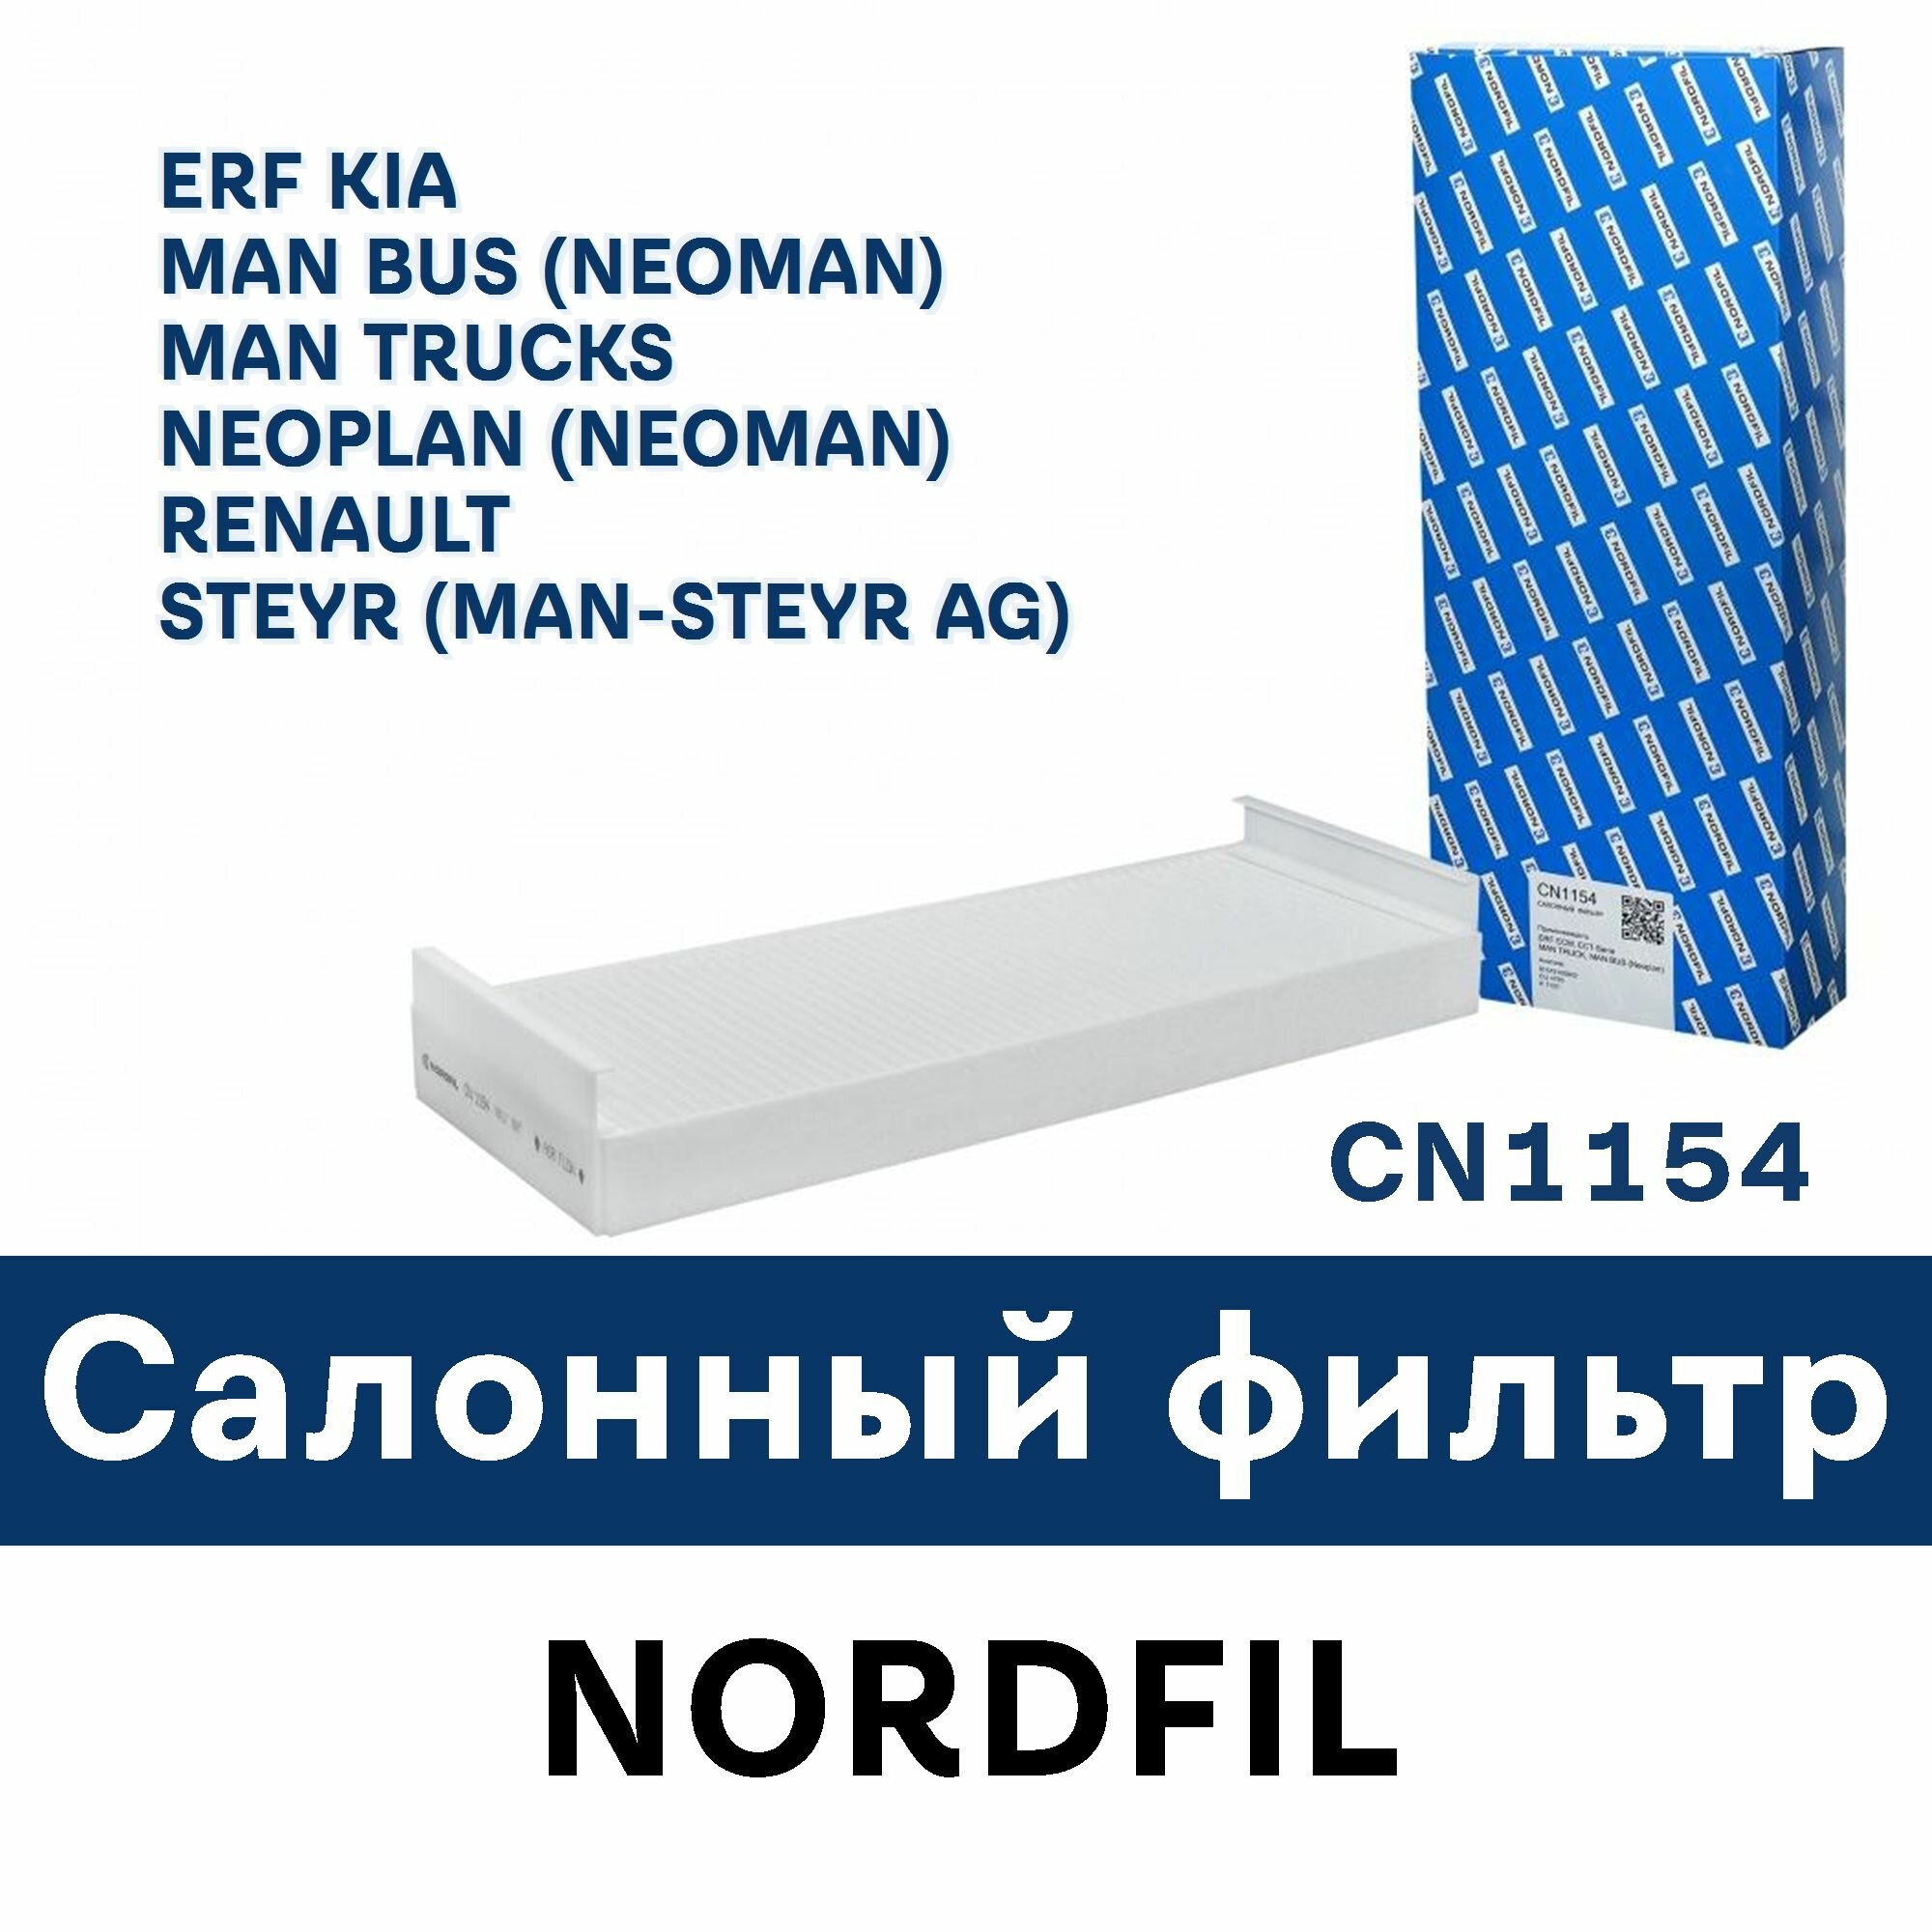 Салонный фильтр для ERF, KIA, MAN BUS (NEOMAN), MAN TRUCKS, NEOPLAN (NEOMAN), RENAULT, STEYR (MAN-STEYR AG) CN1154 NORDFIL